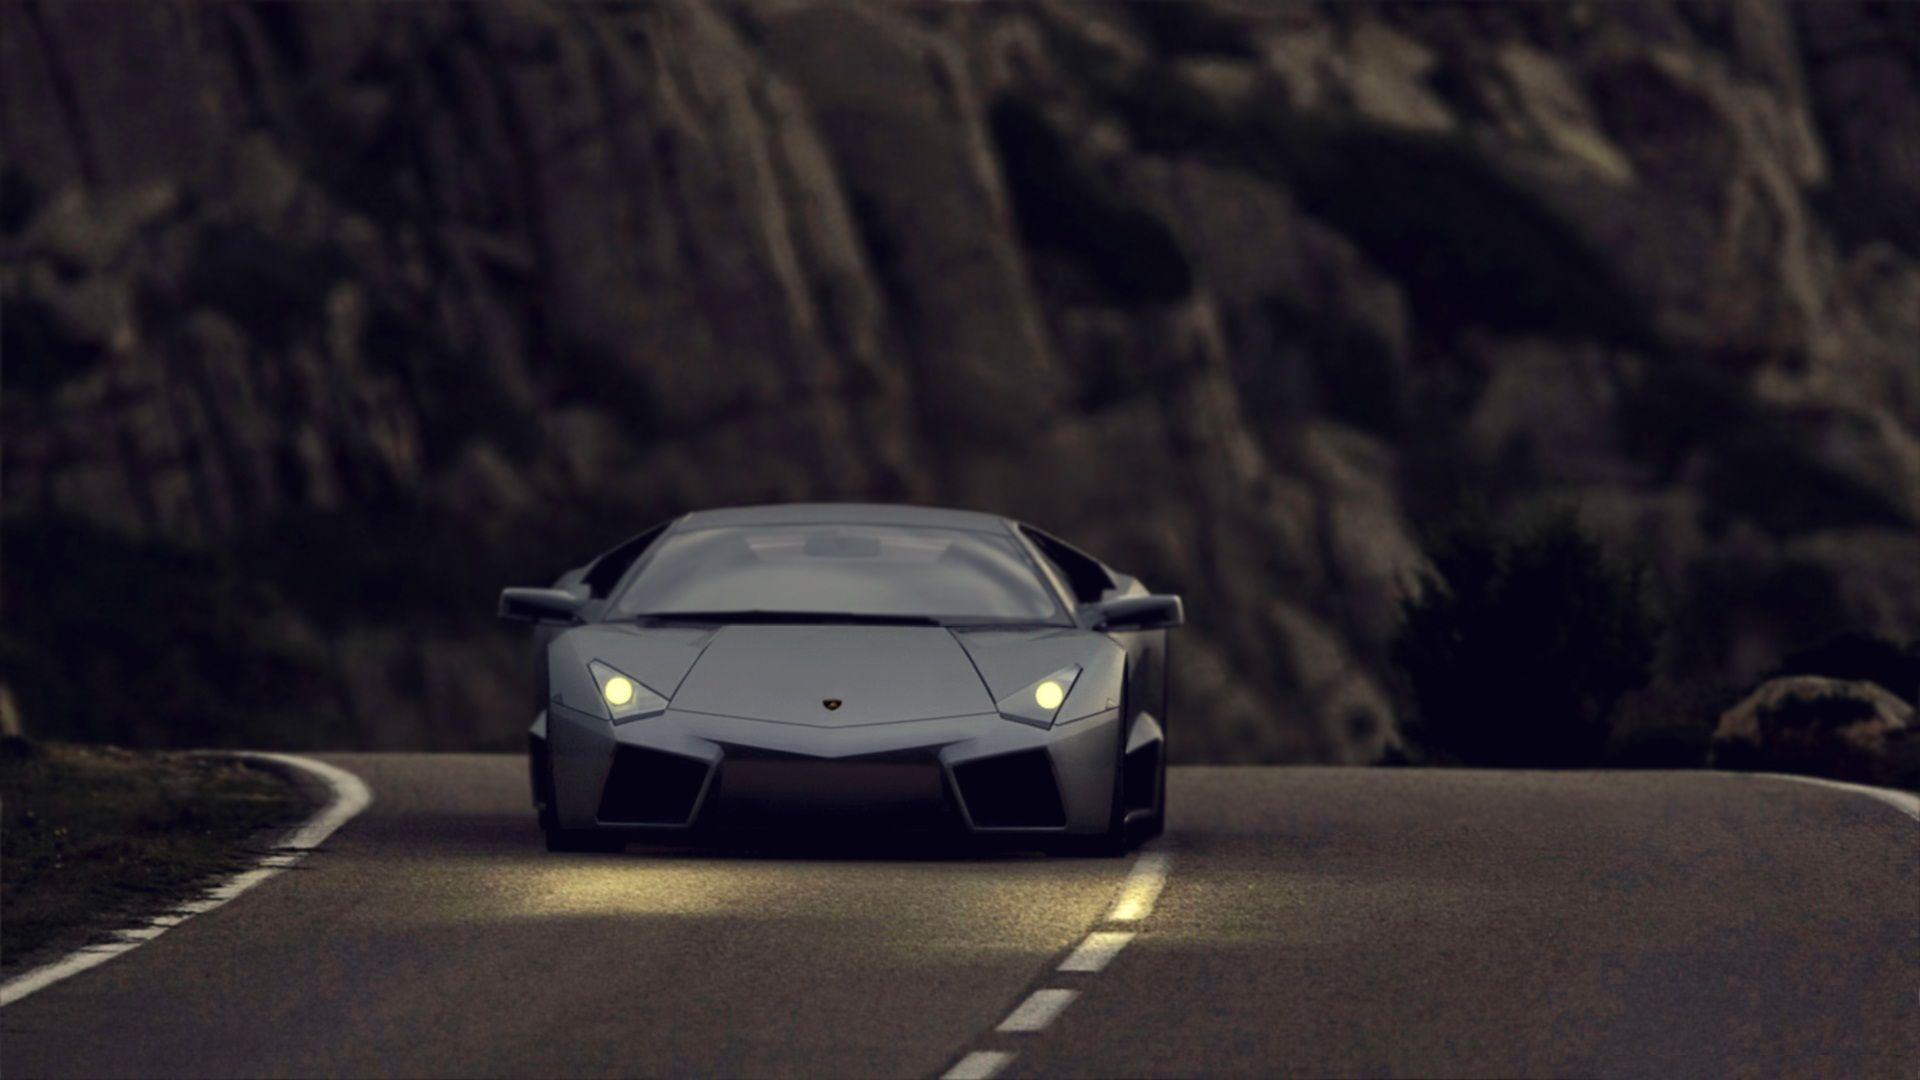 Black Lamborghini Wallpapers Wallpaper Cave Images, Photos, Reviews